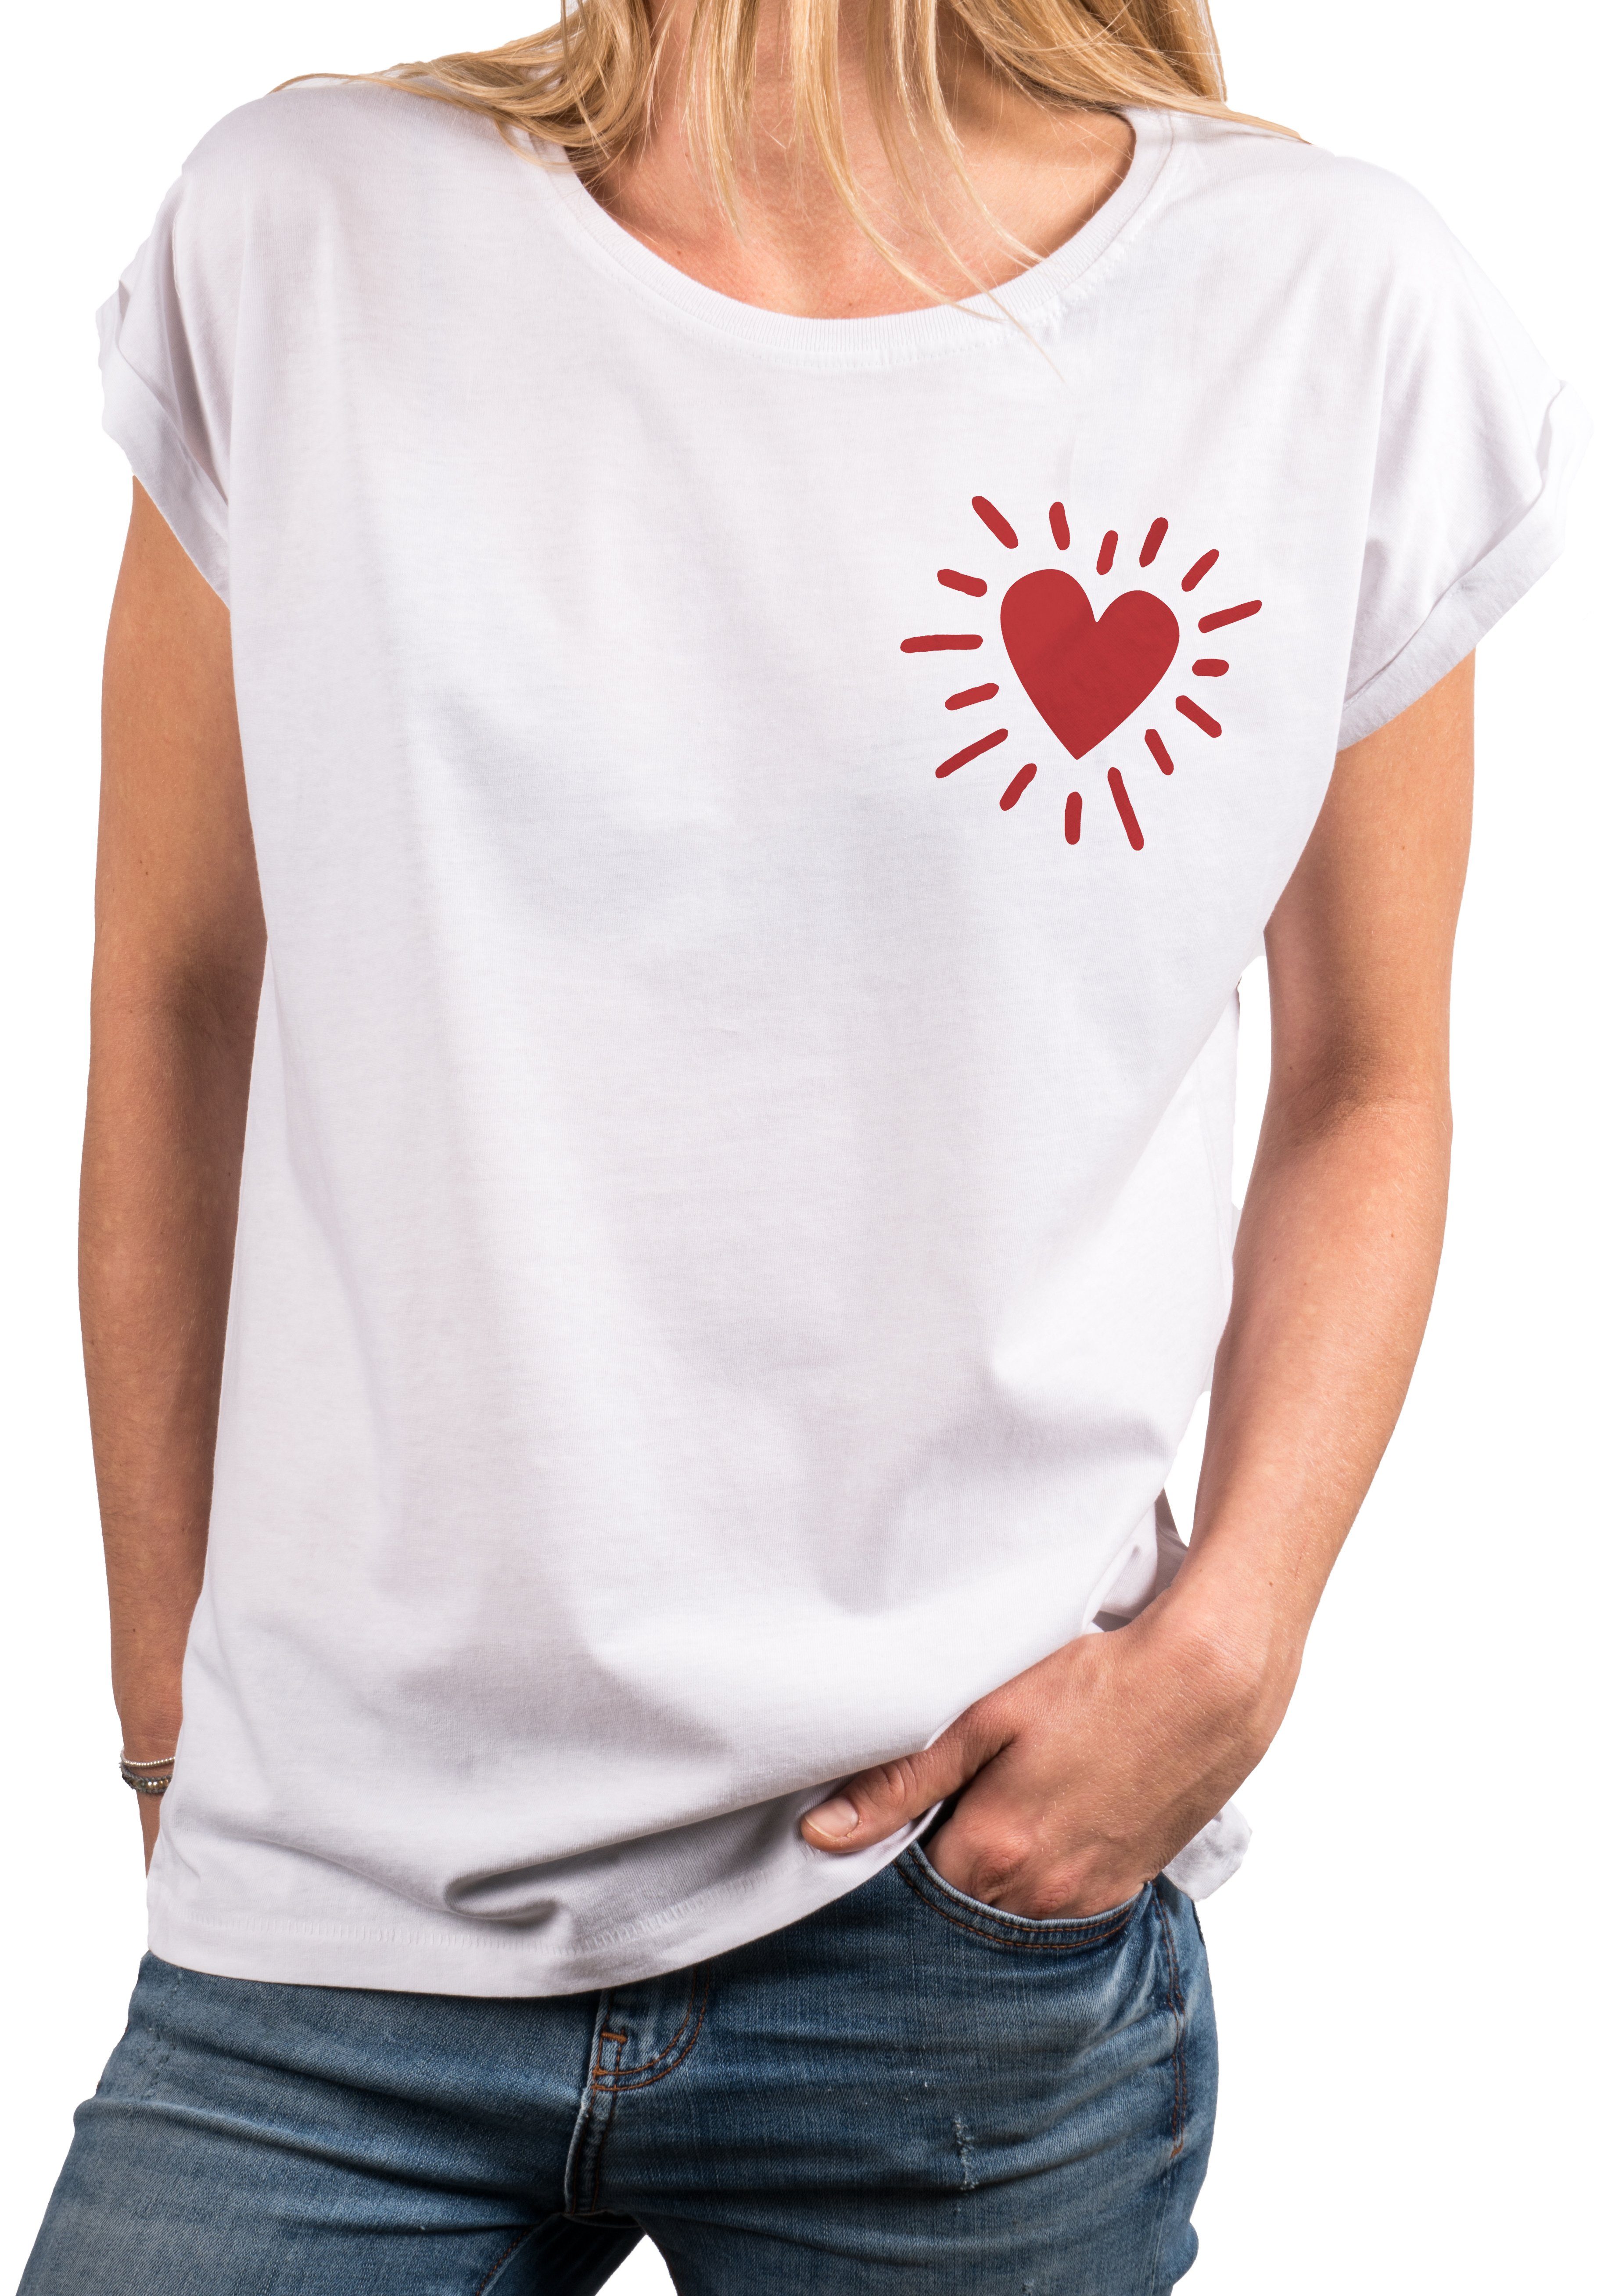 MAKAYA Print-Shirt Damen Frauen Baumwolle Top Aufdruck Oberteile, Druck Kurzam Motiv Herz Heart Modische Herzen